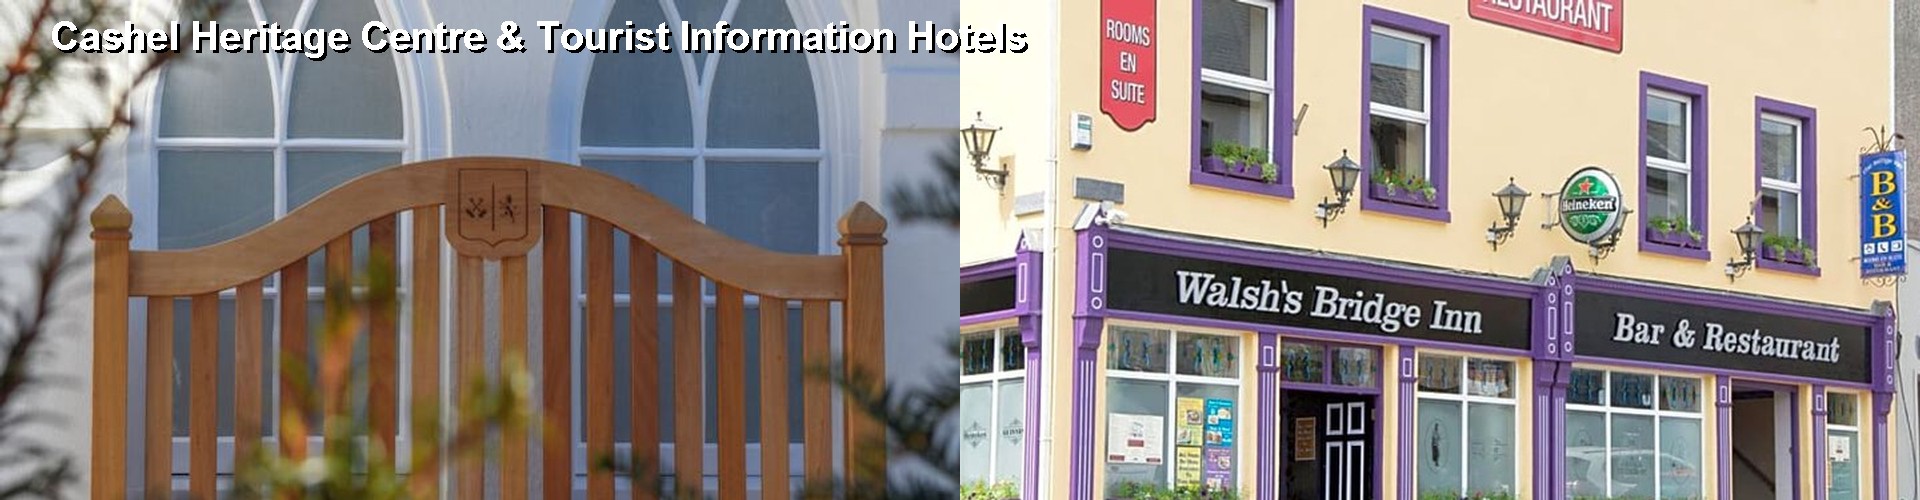 5 Best Hotels near Cashel Heritage Centre & Tourist Information